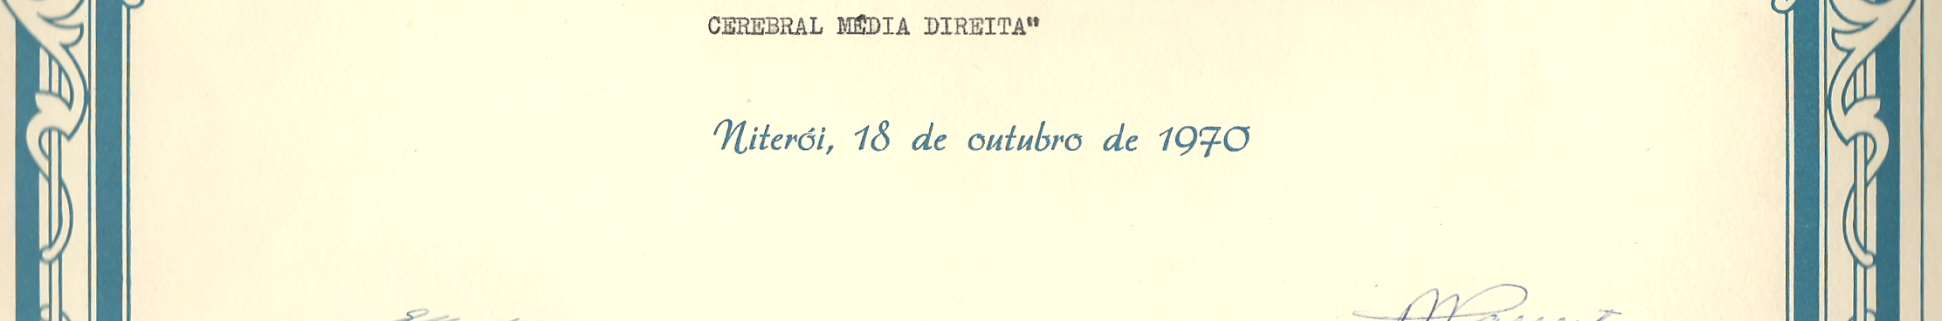 1970:Certificado -XI Congresso Médico